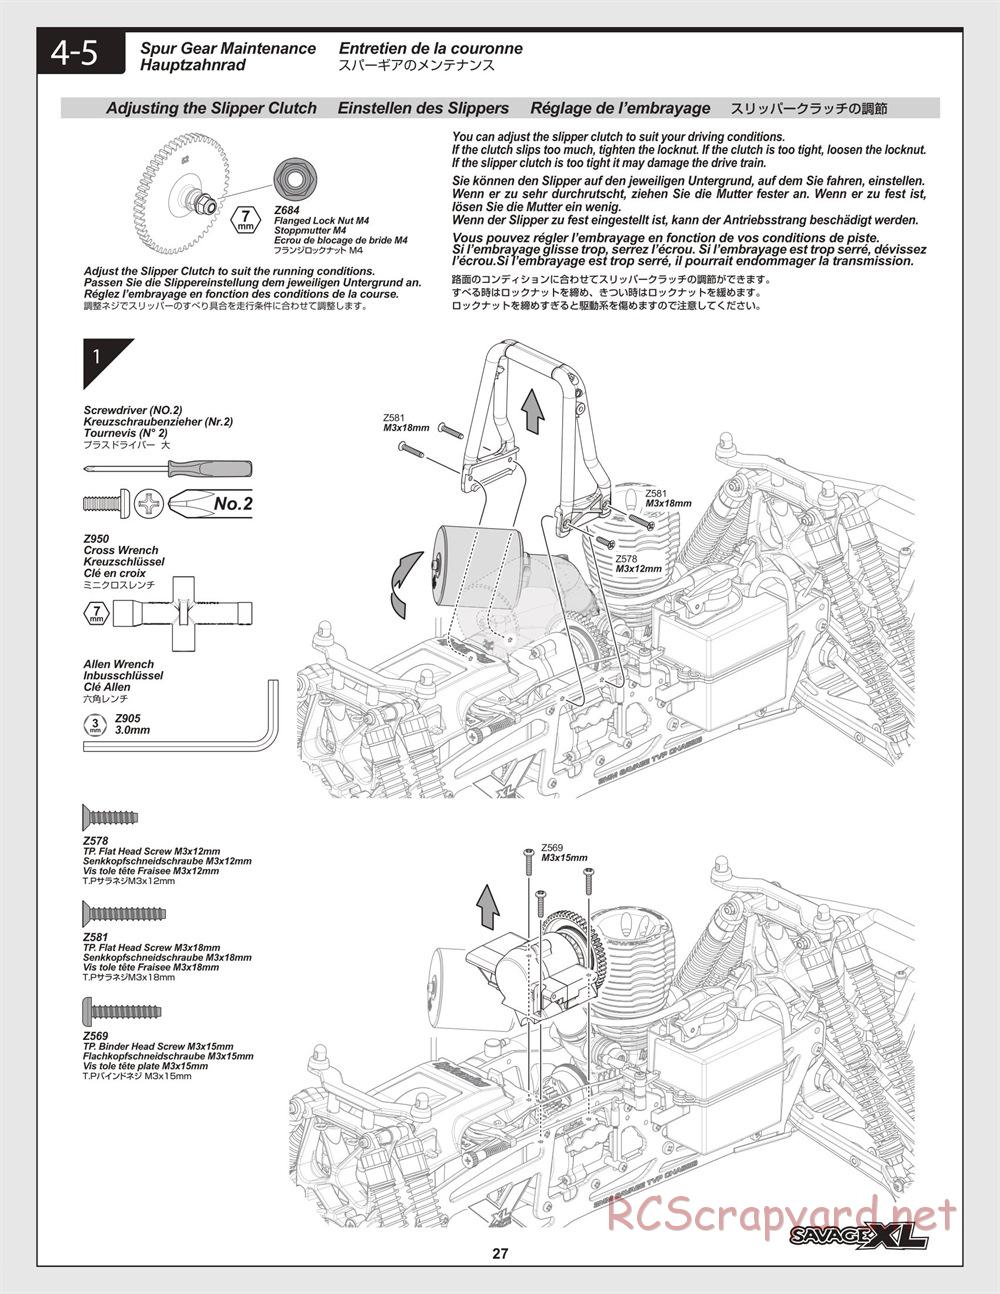 HPI - Savage XL 5.9 - Manual - Page 27